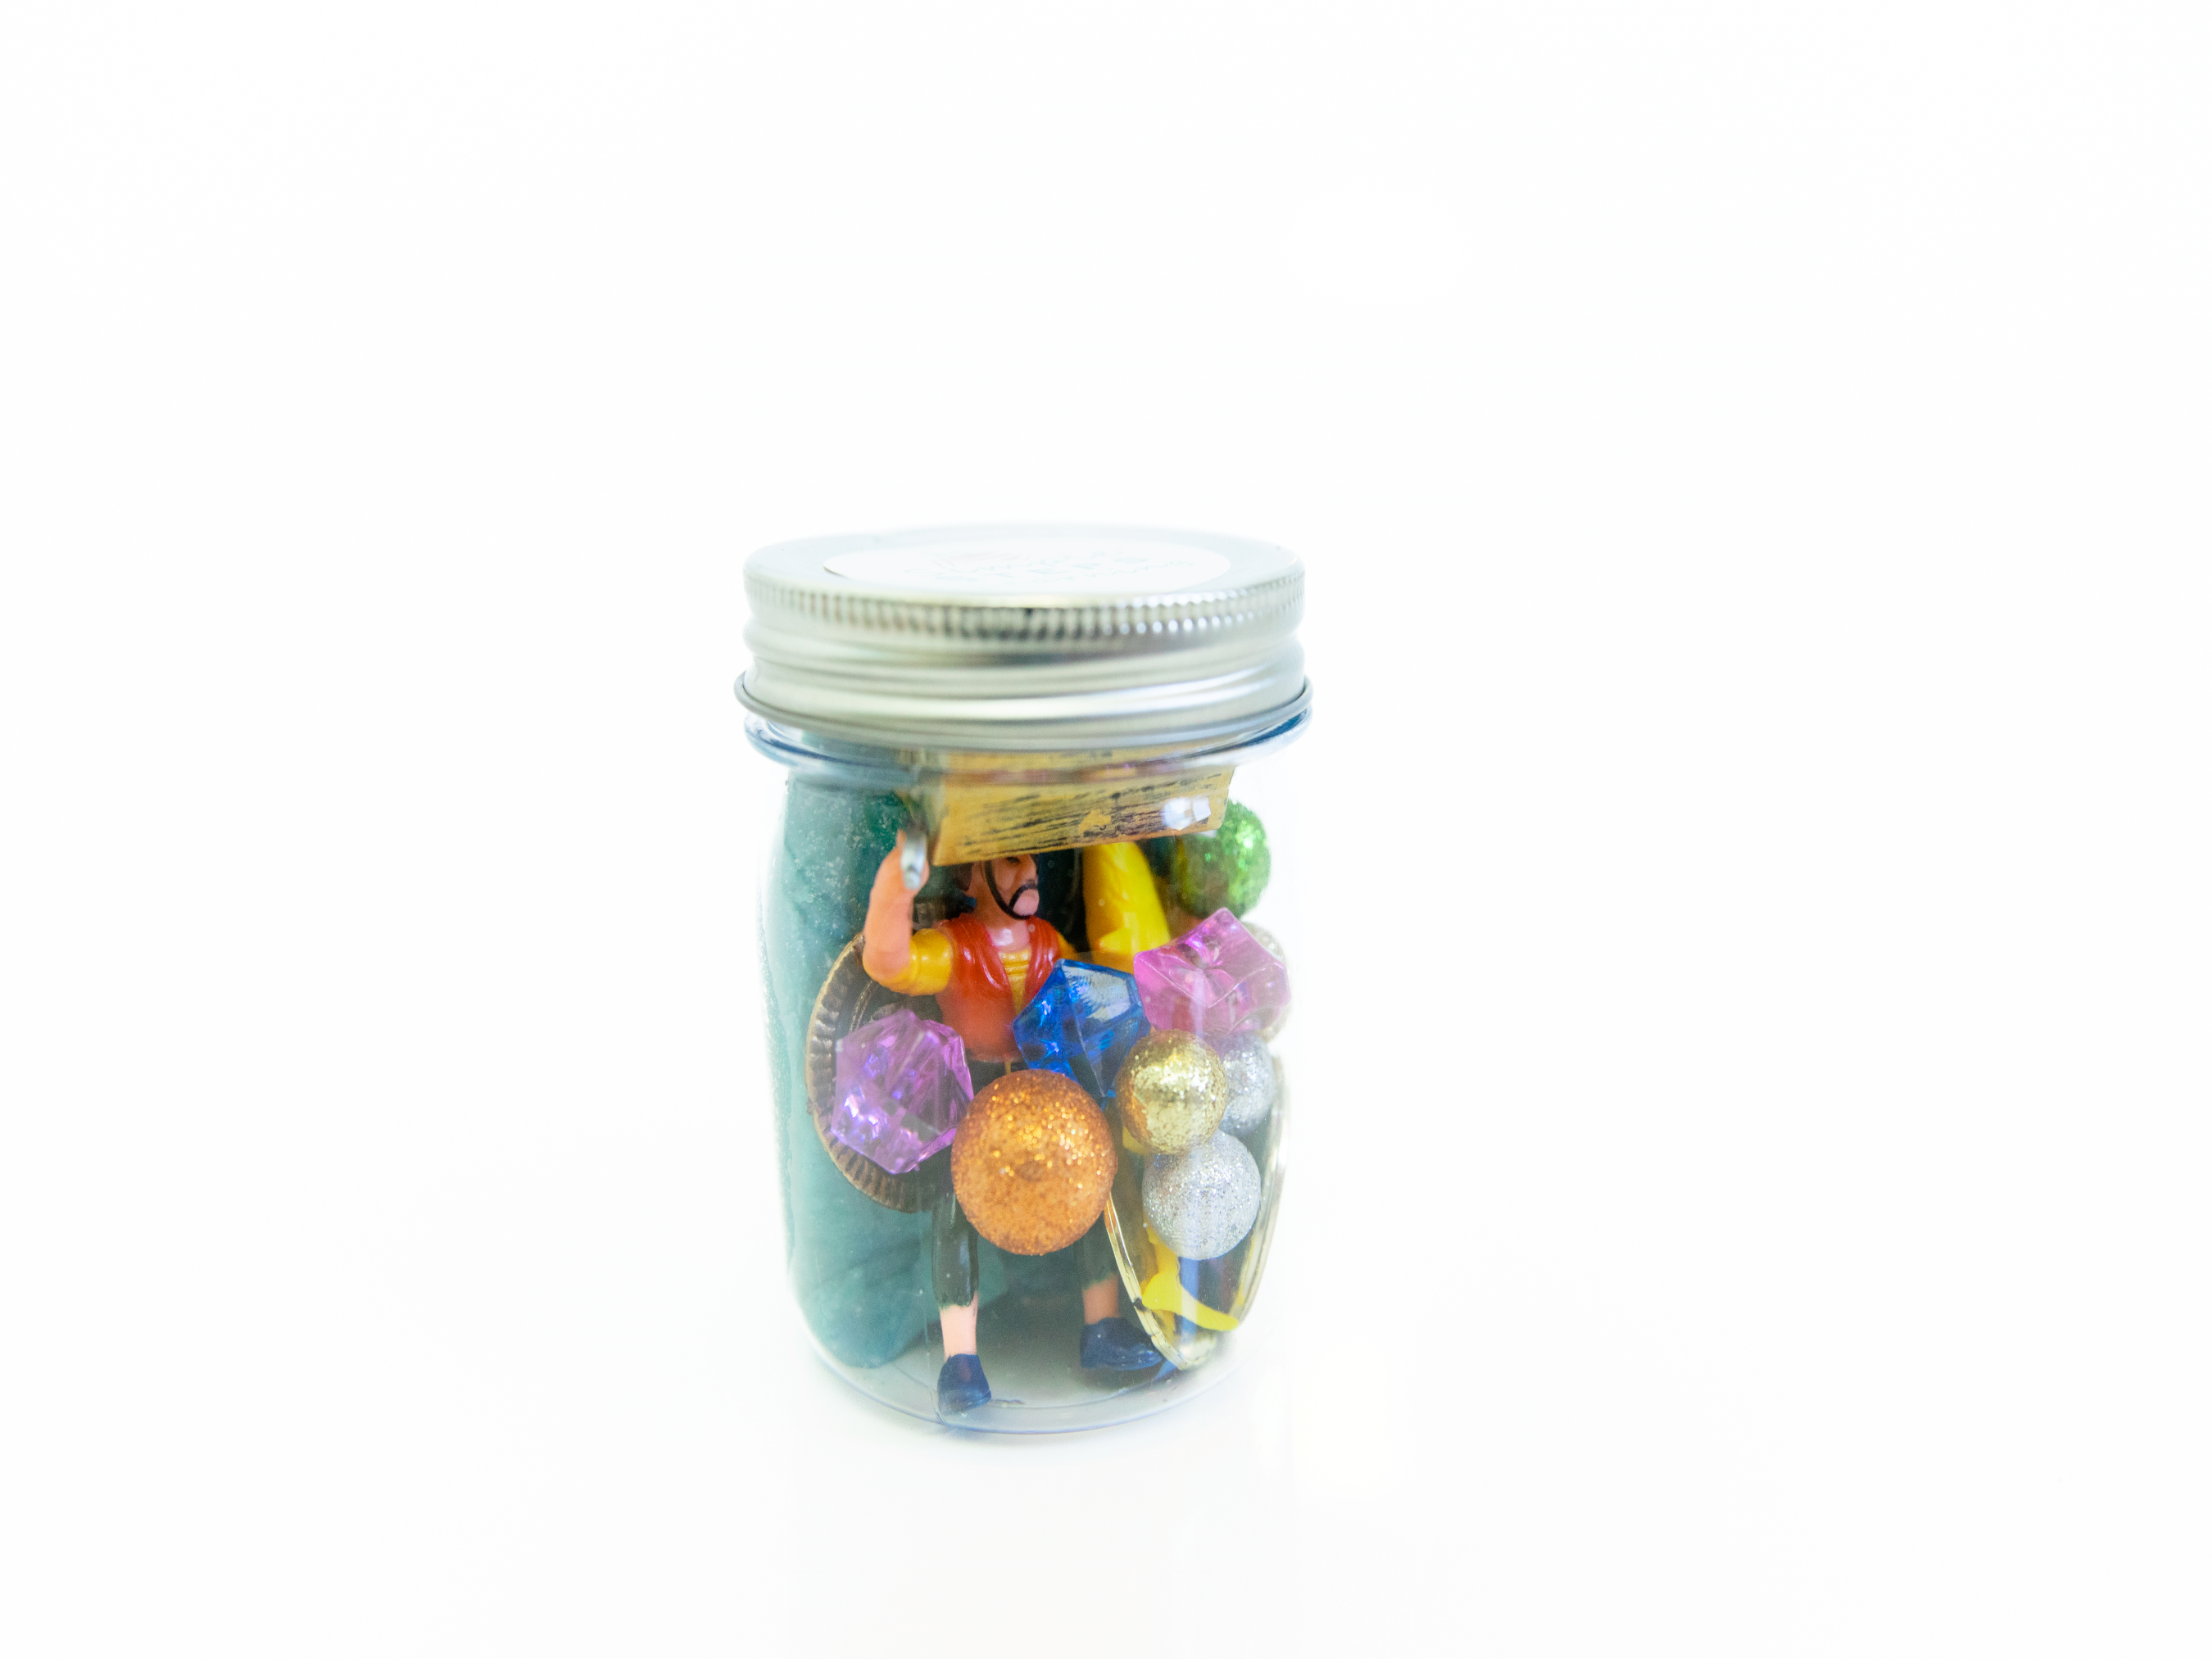 12 month prepaid playdough jar subscription